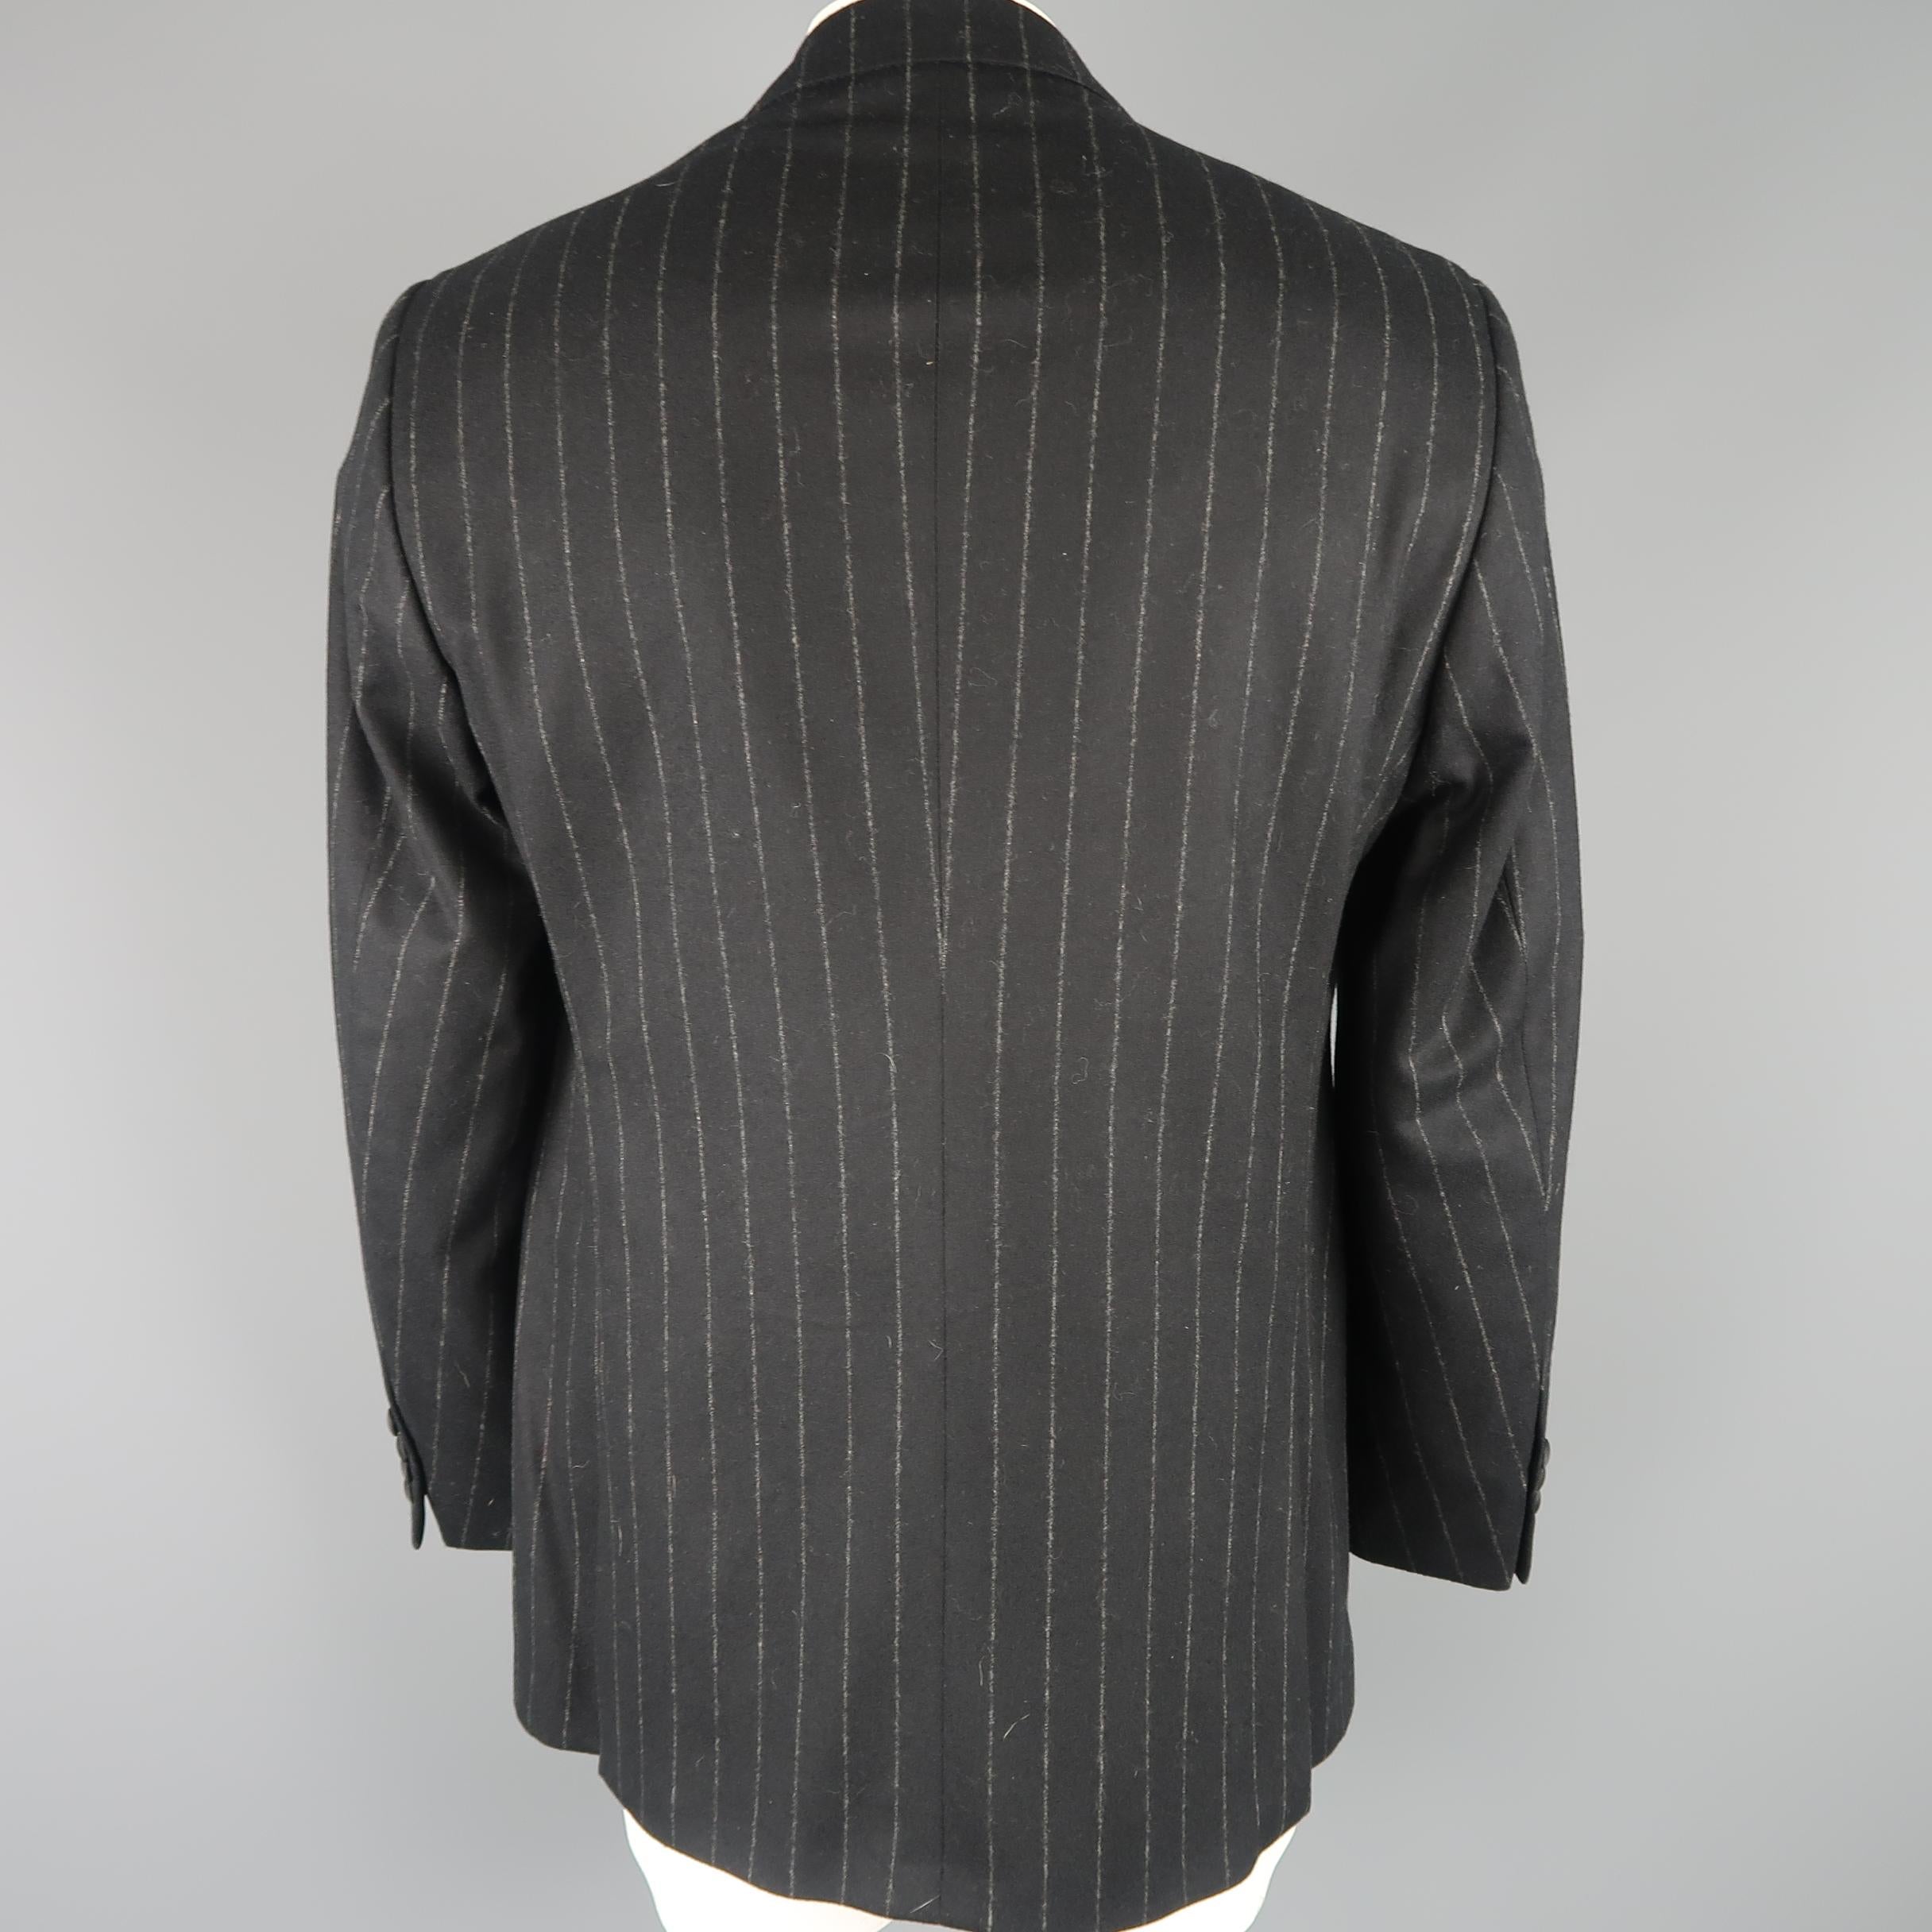 RALPH LAUREN 42 Black Stripe Wool / Cashmere Tuxedo Lapel Sport Coat / Jacket 2